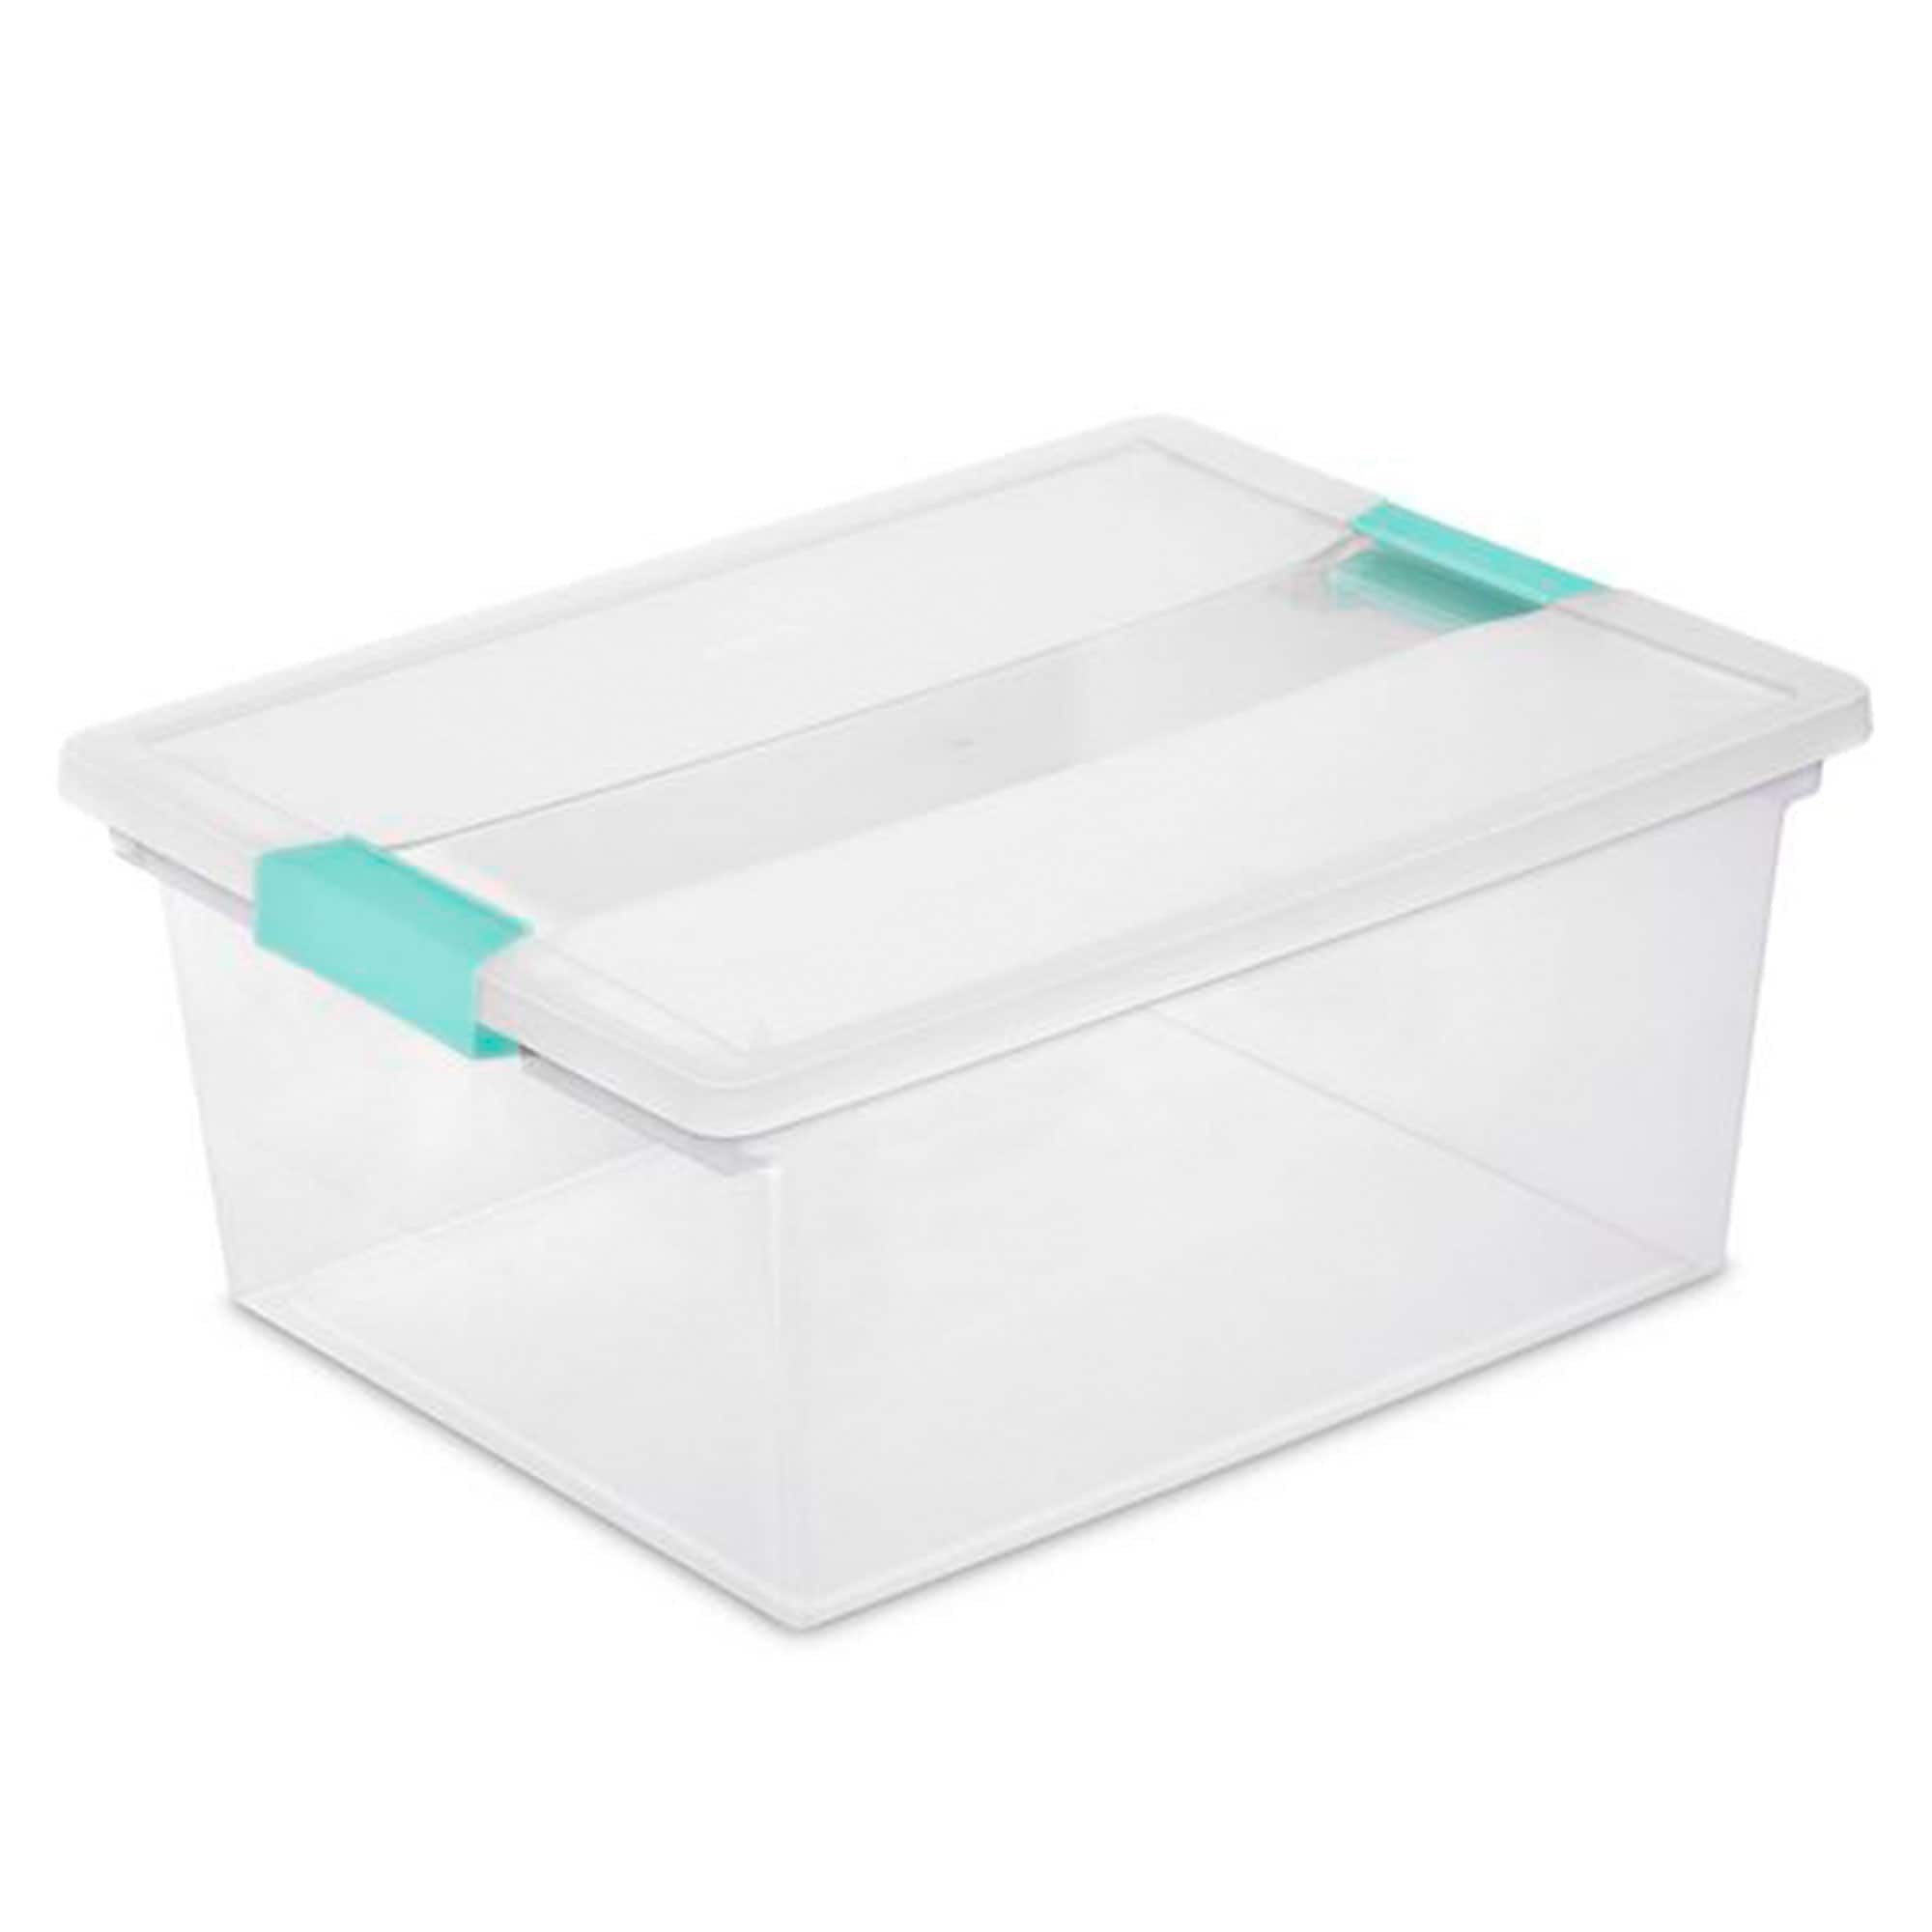 Sterilite 28 Quart Clear Plastic Stacking Storage Container Box w